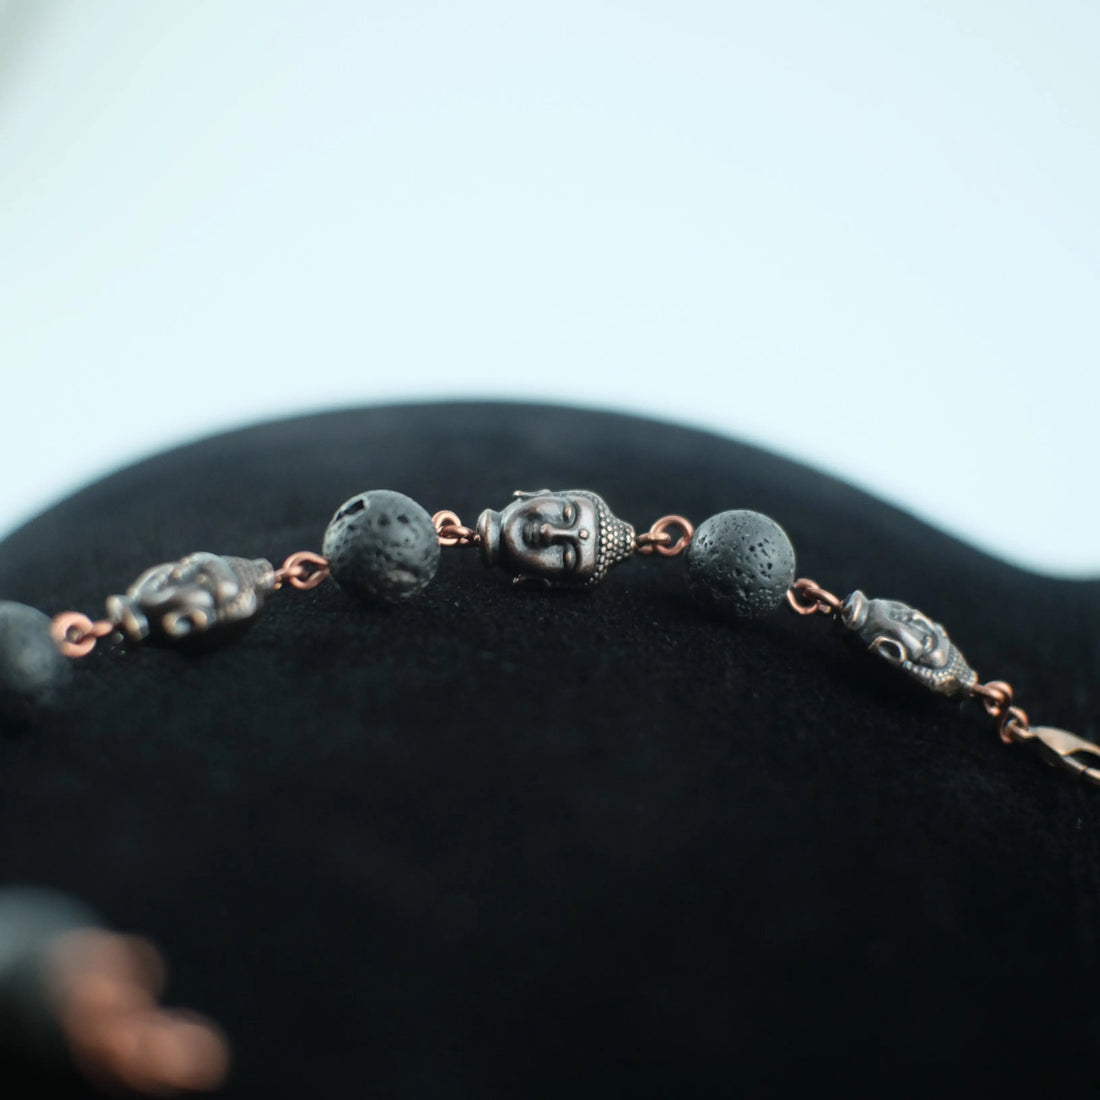 Beaded Bracelet from Urban Alcatraz. Composed of Genuine Lava Stone beads and Copper Tara heads